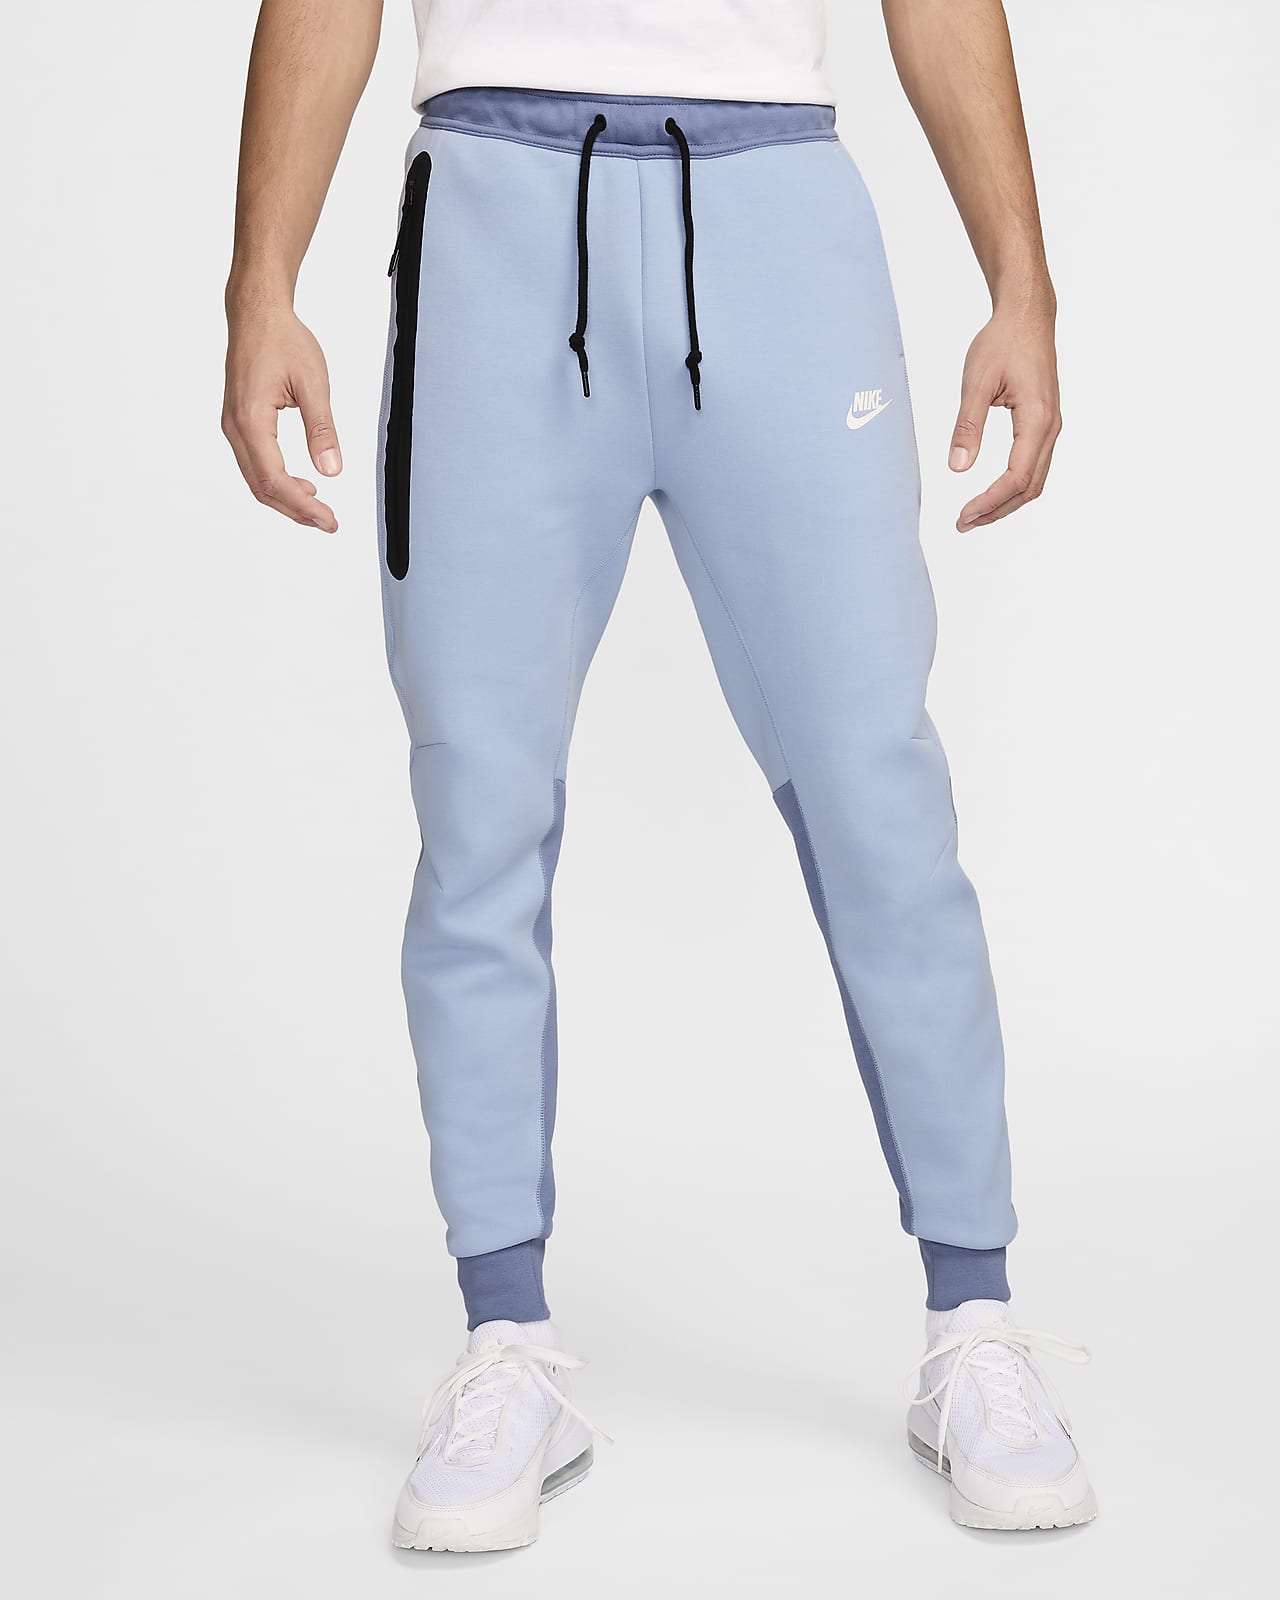 Nike Men's Sweat Pants Casual Regular Fit Trouser Sports Joggers Gym Wear  Track